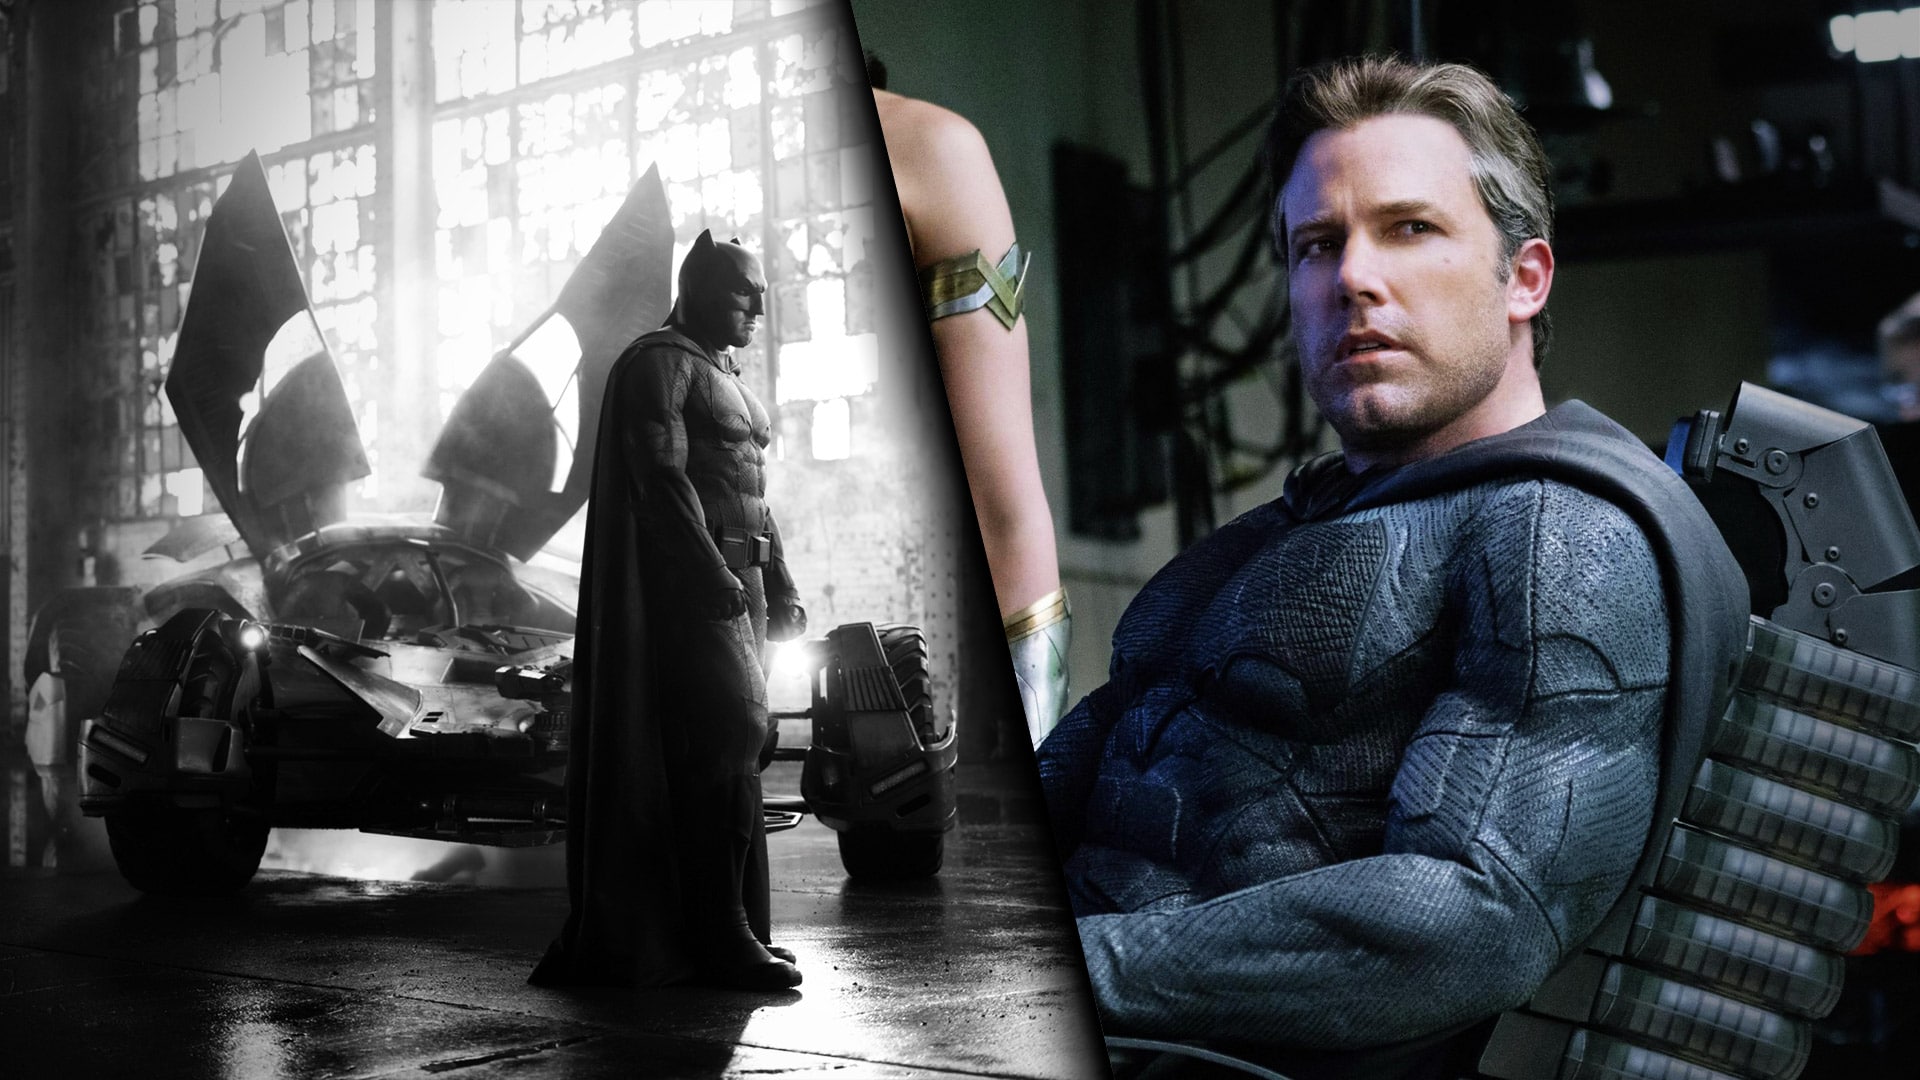 Director Zack Snyder Reveals Latest Photo Of Ben Affleck’s Batman With The Batmobile